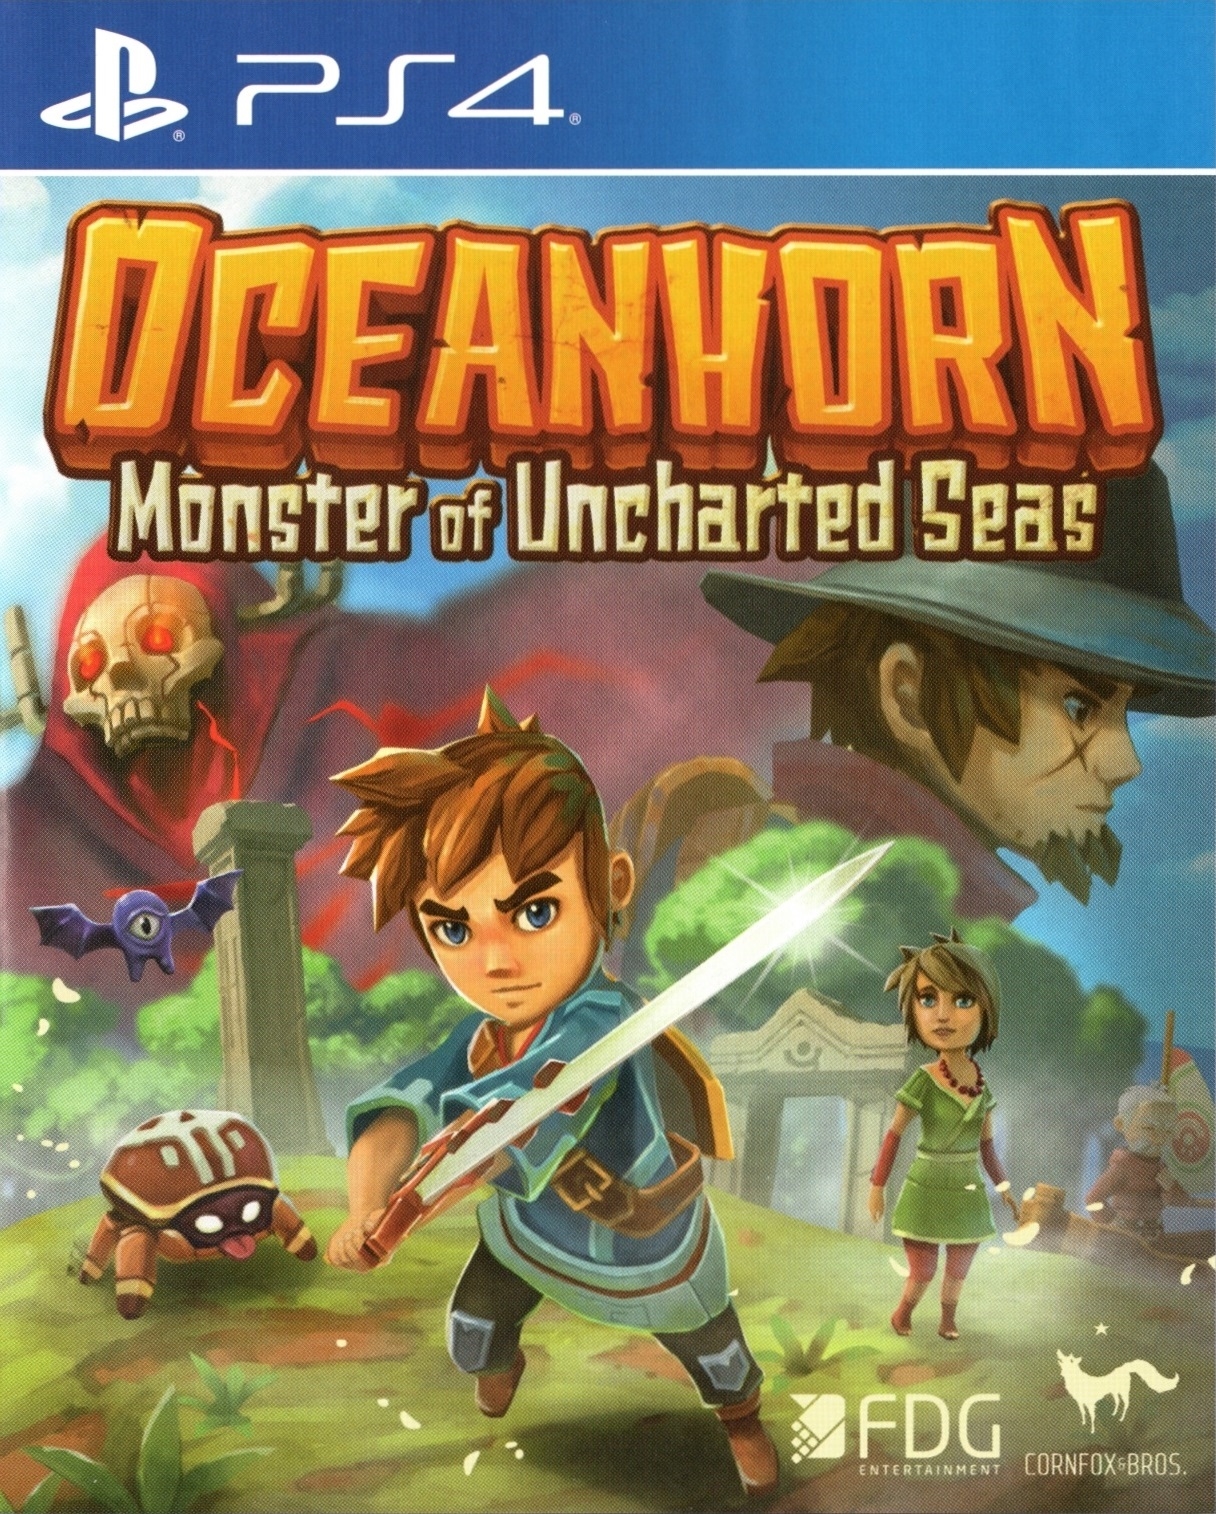 Oceanhorn - Monster of Uncharted Seas for Nintendo Switch - Nintendo  Official Site